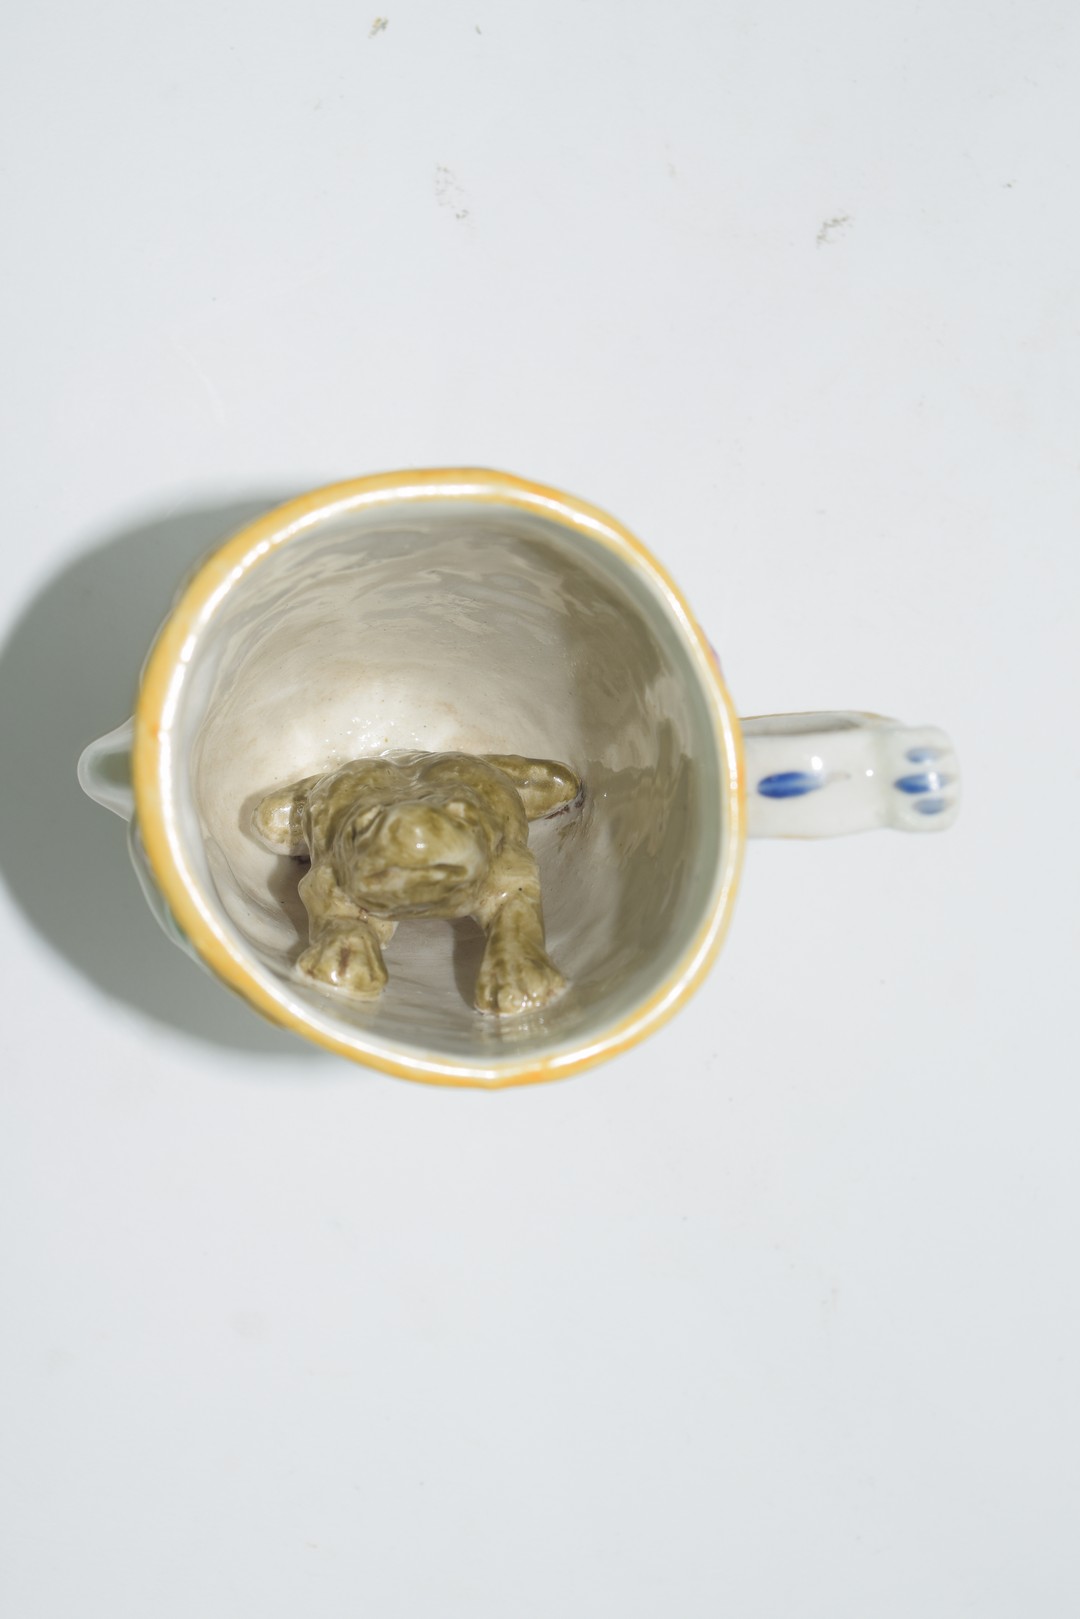 Late 19th century pearlware frog mug - Image 4 of 5